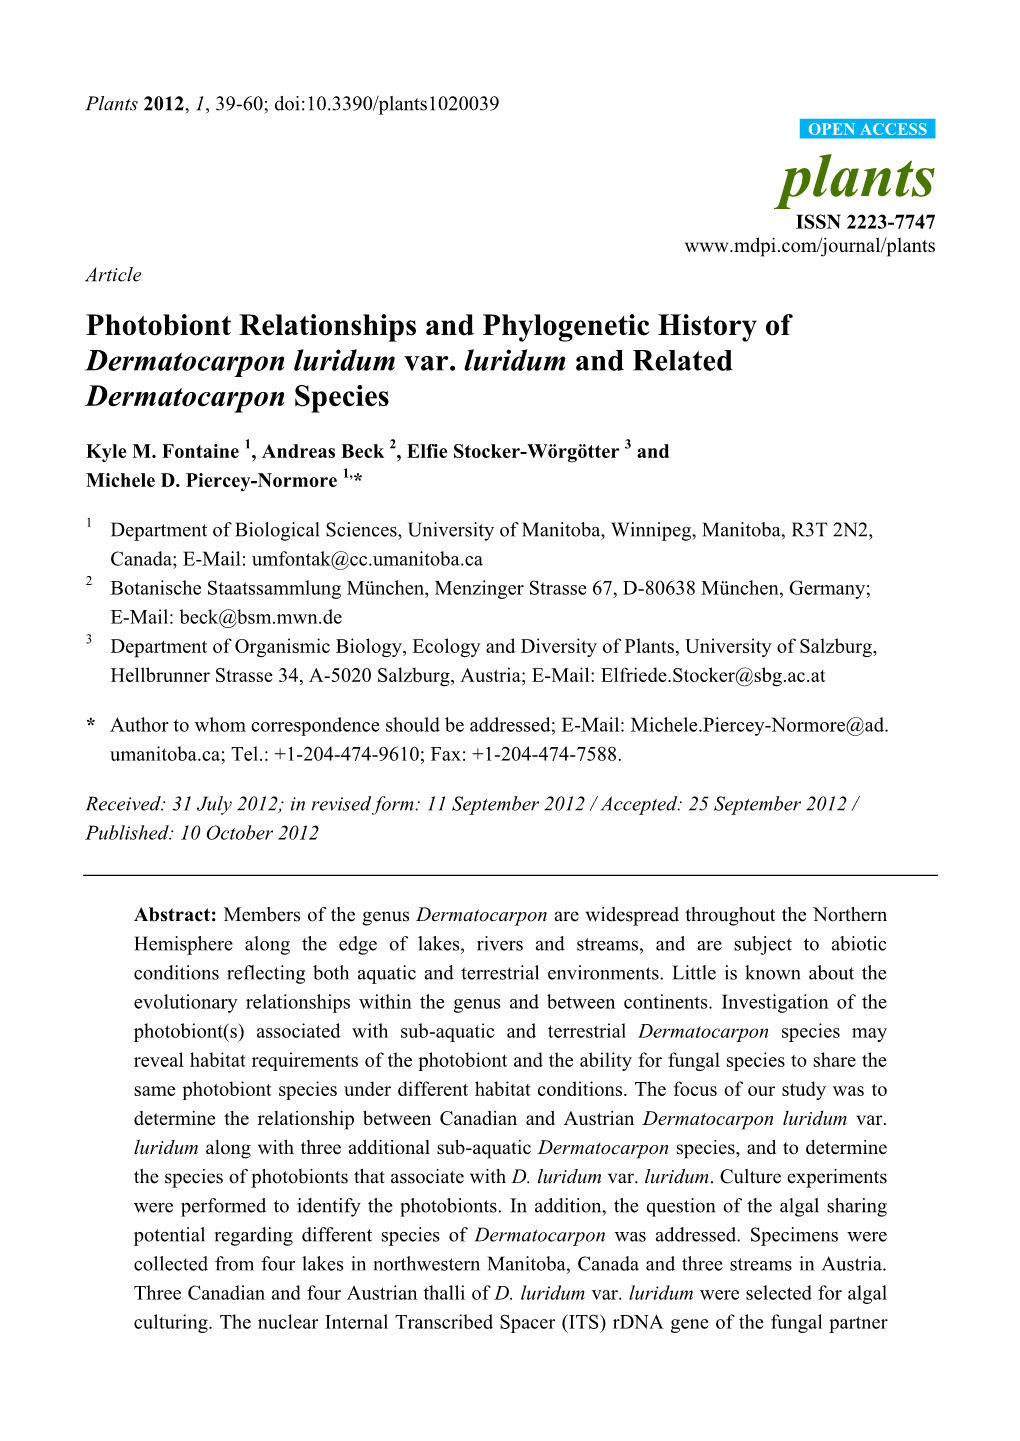 Photobiont Relationships and Phylogenetic History of Dermatocarpon Luridum Var